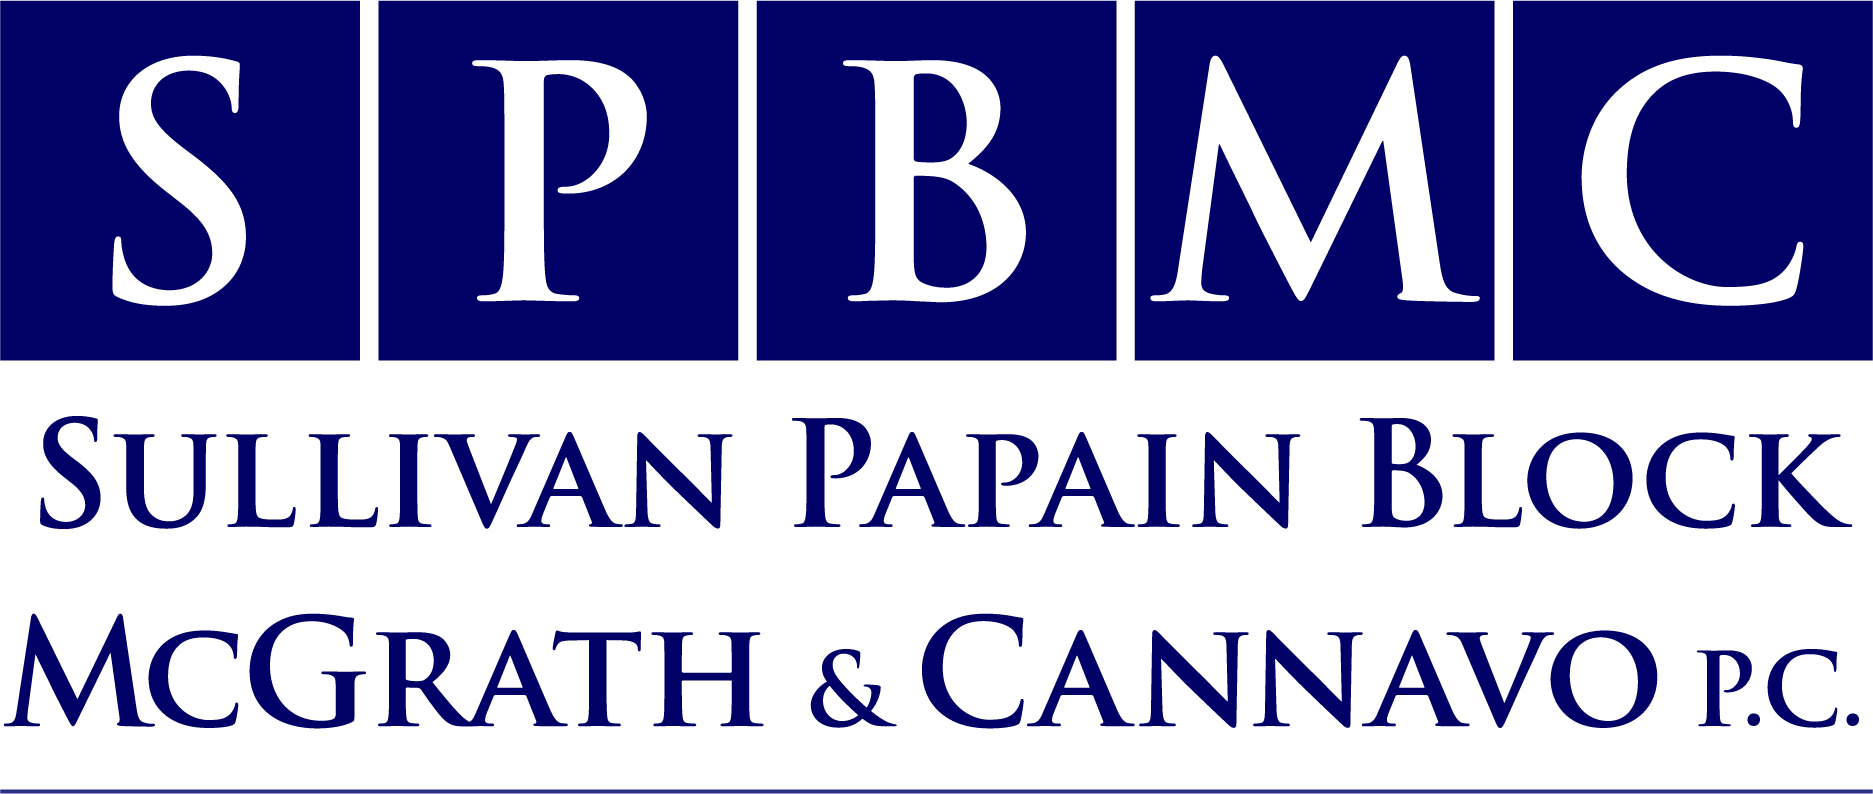 Sullivan Papain Block McGrath & Cannavo P.C. - New York Personal Injury Attorneys